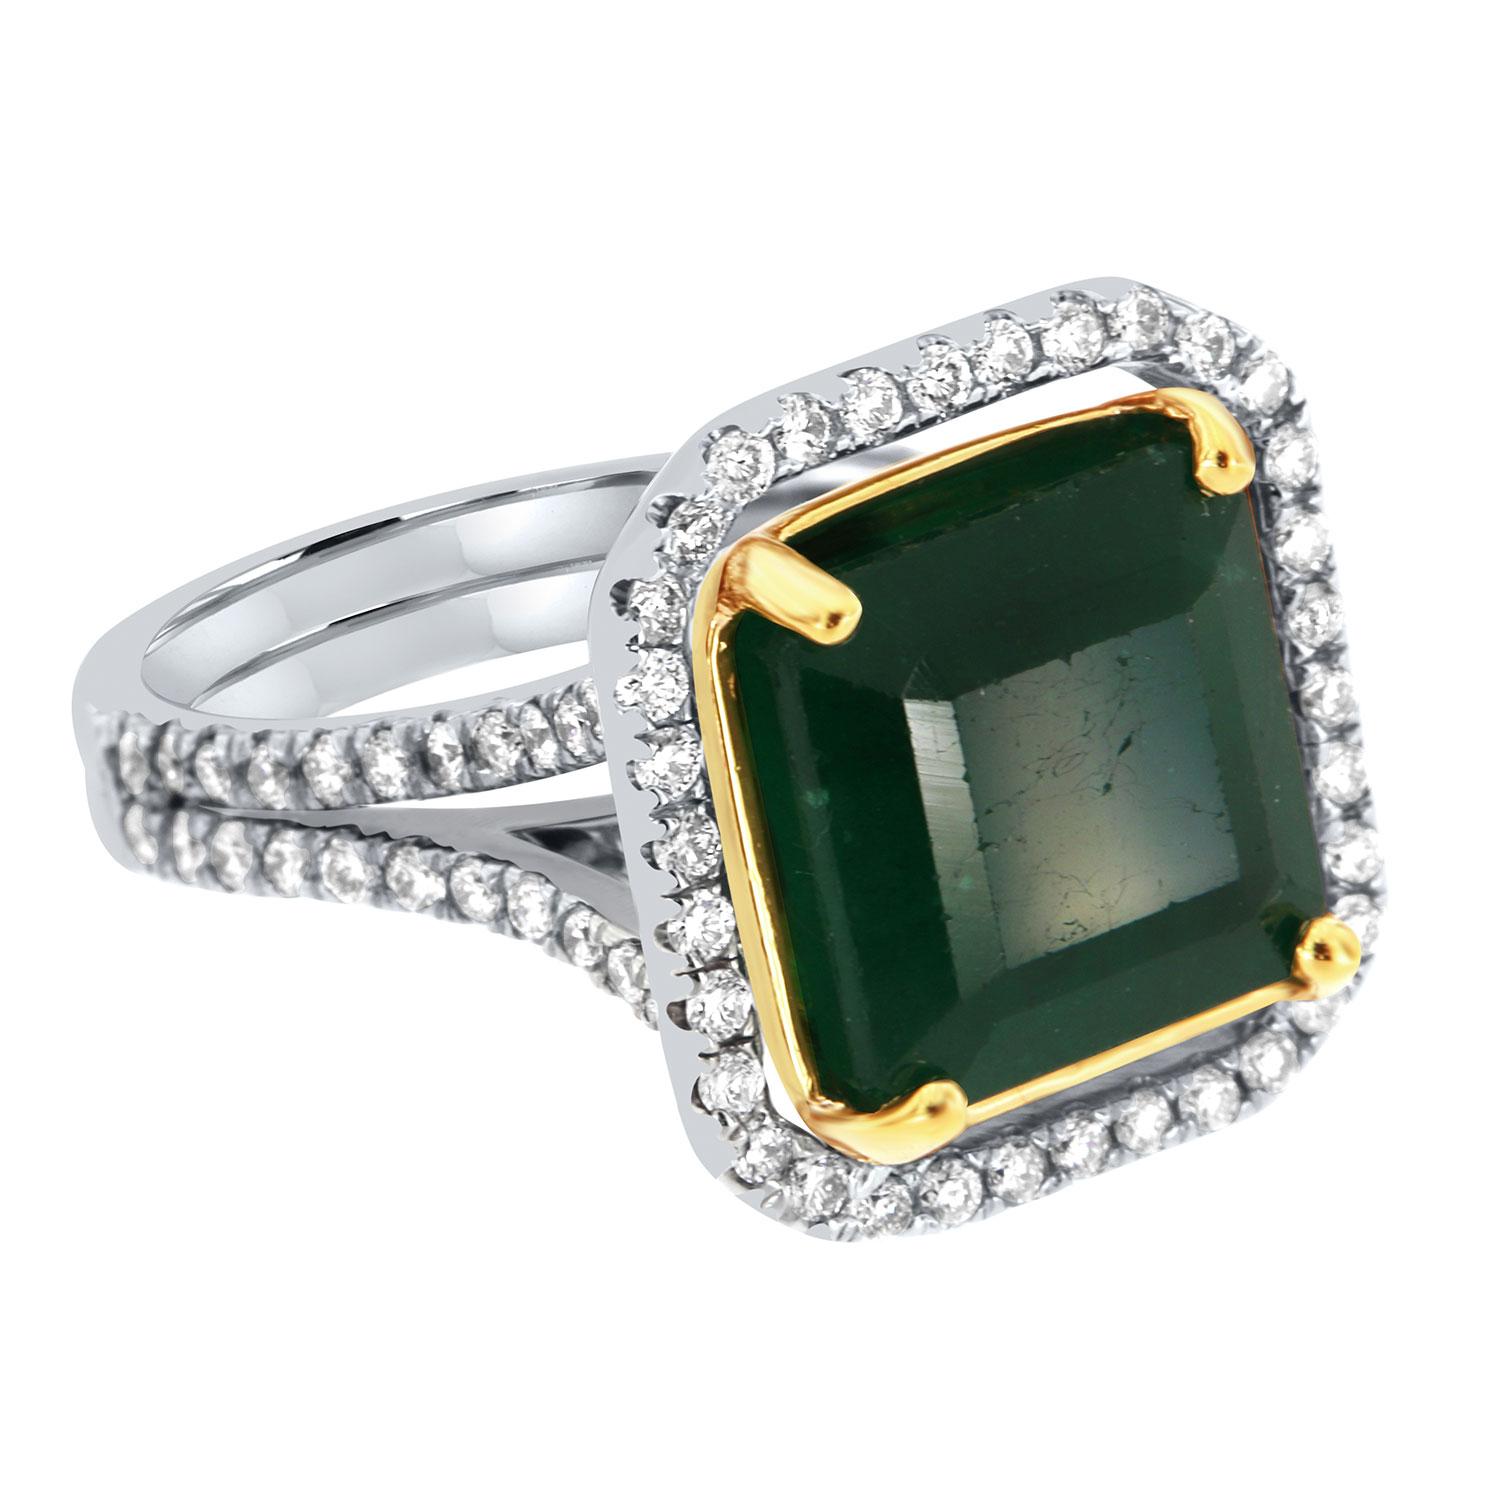 Asscher Cut GIA Certified 9.61 Carat Green Emerald 18K White & Yellow Halo Diamond Ring For Sale